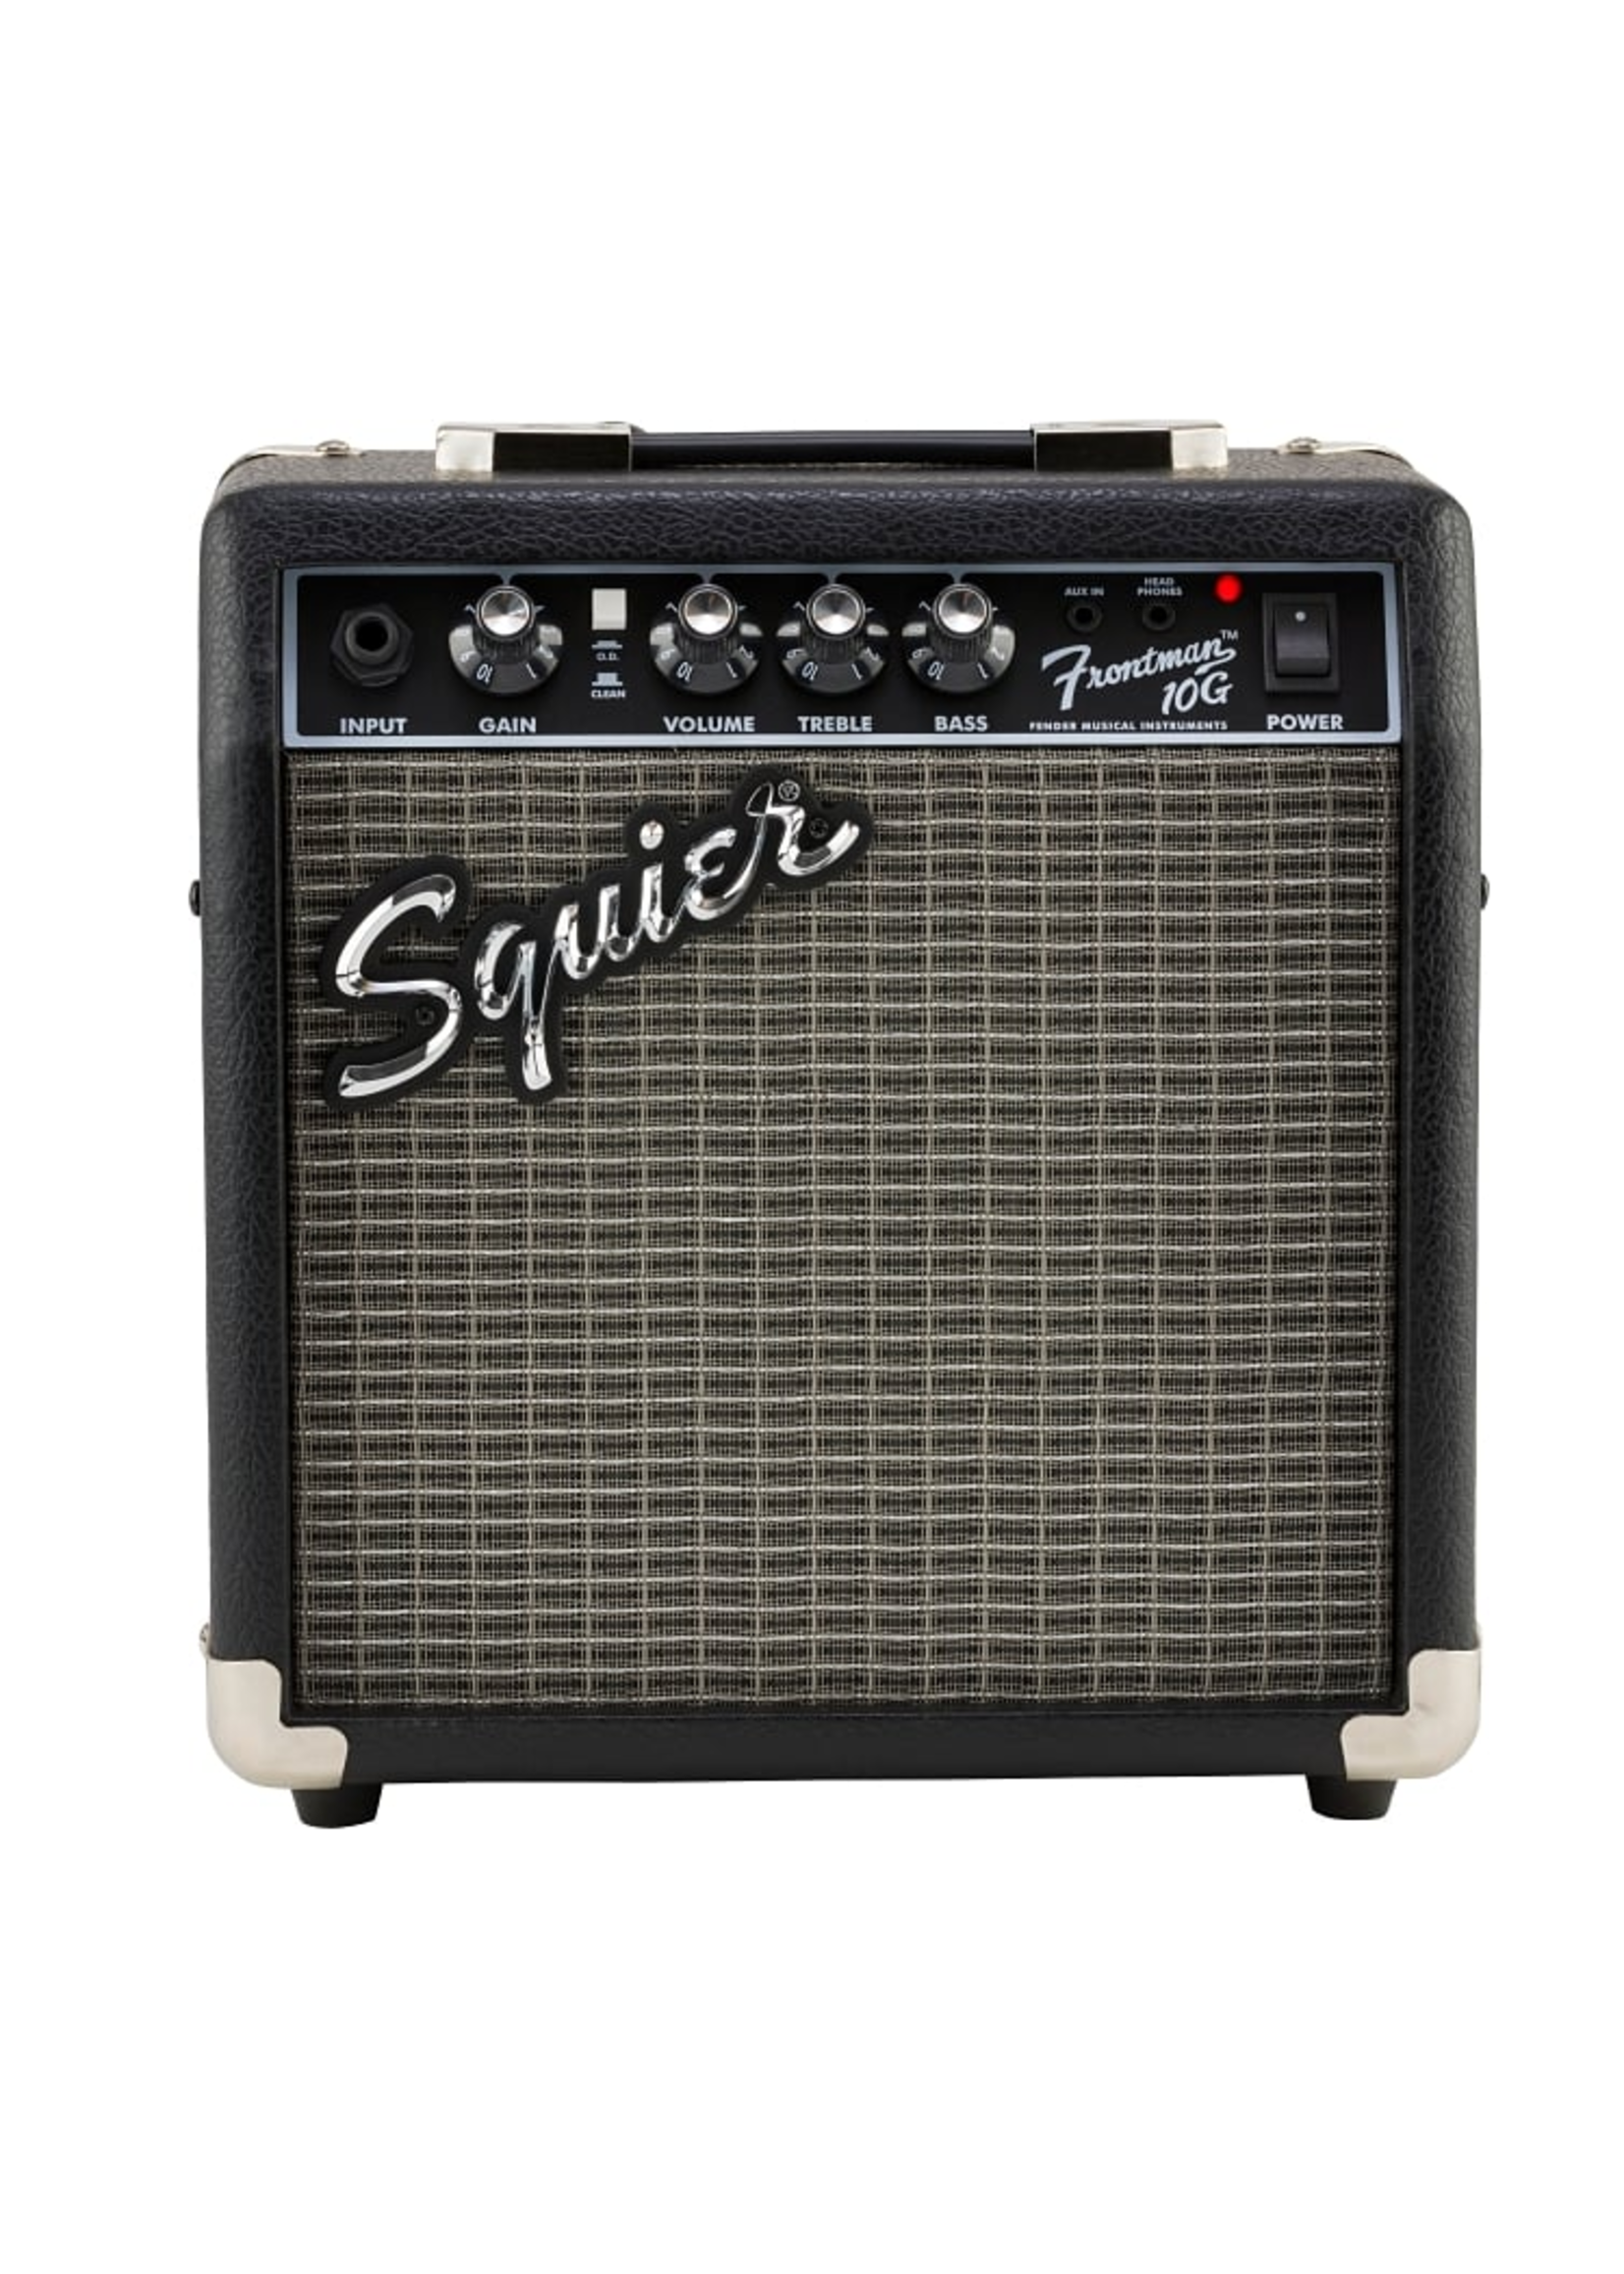 Squier Squier Squier Sonic Stratocaster Pack, Maple Fingerboard, Black, Gig Bag, 10G - 120V